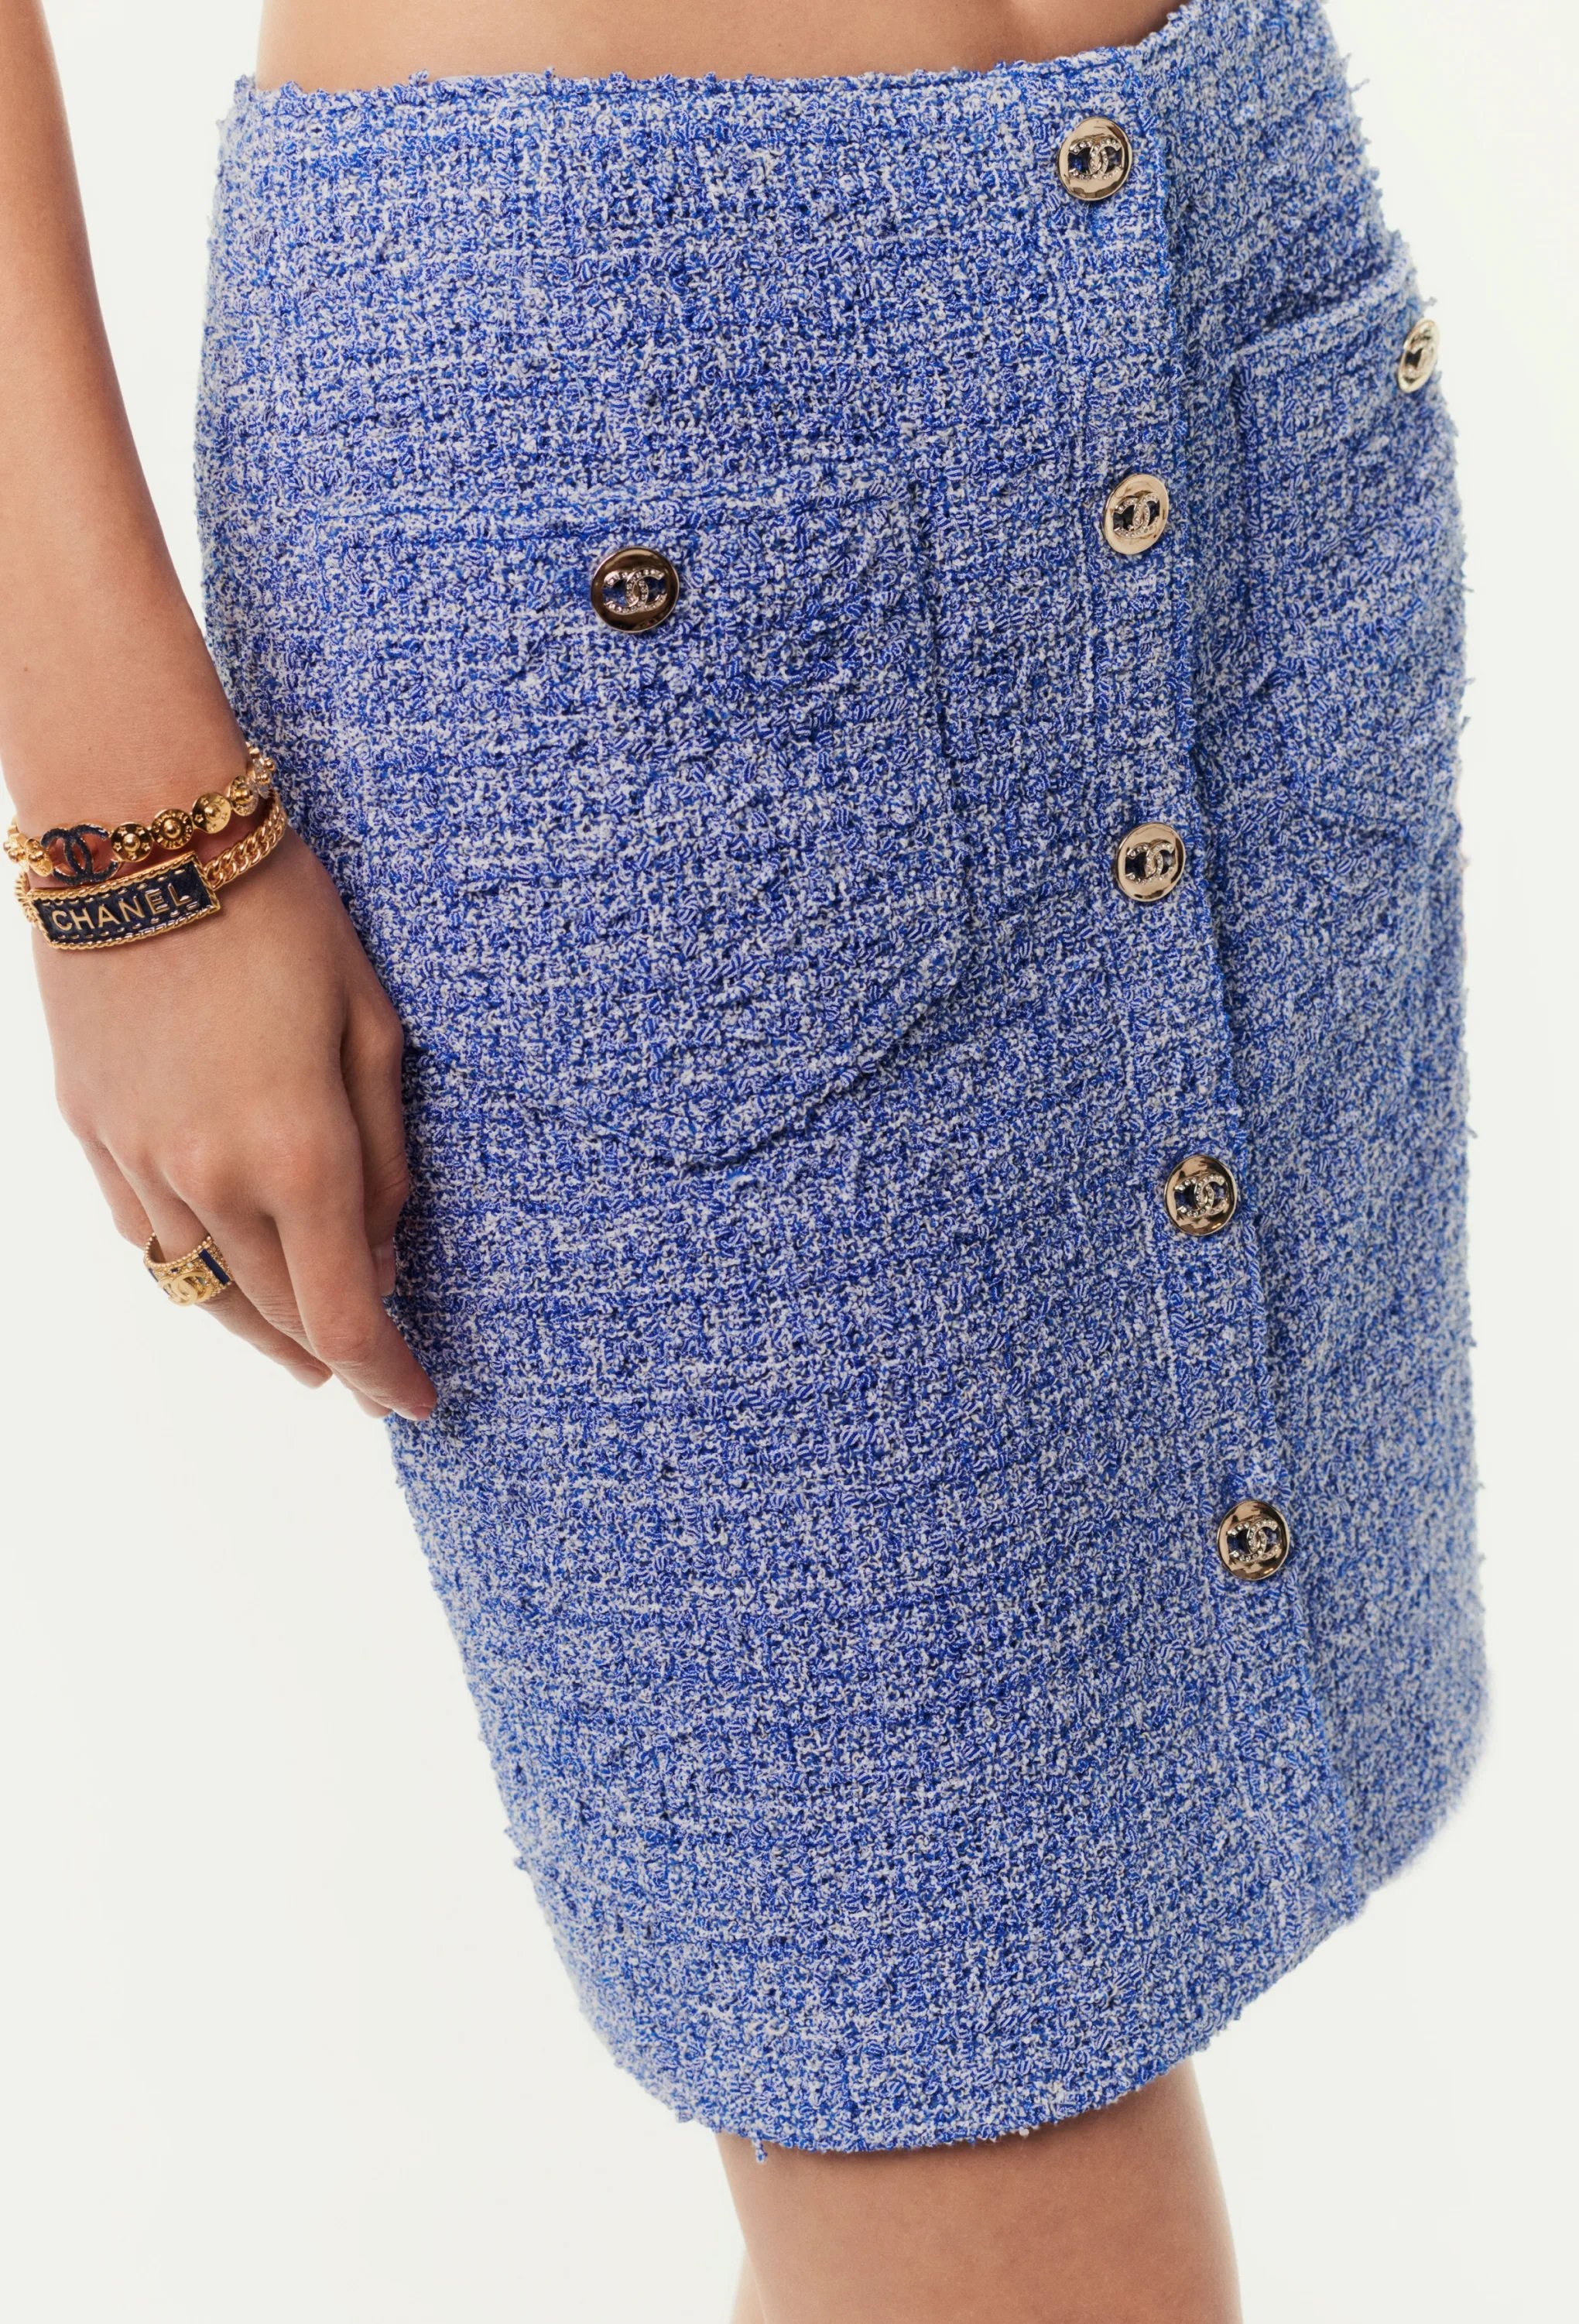 Chanel Tweed Button Skirt in BlueWhite.jpg